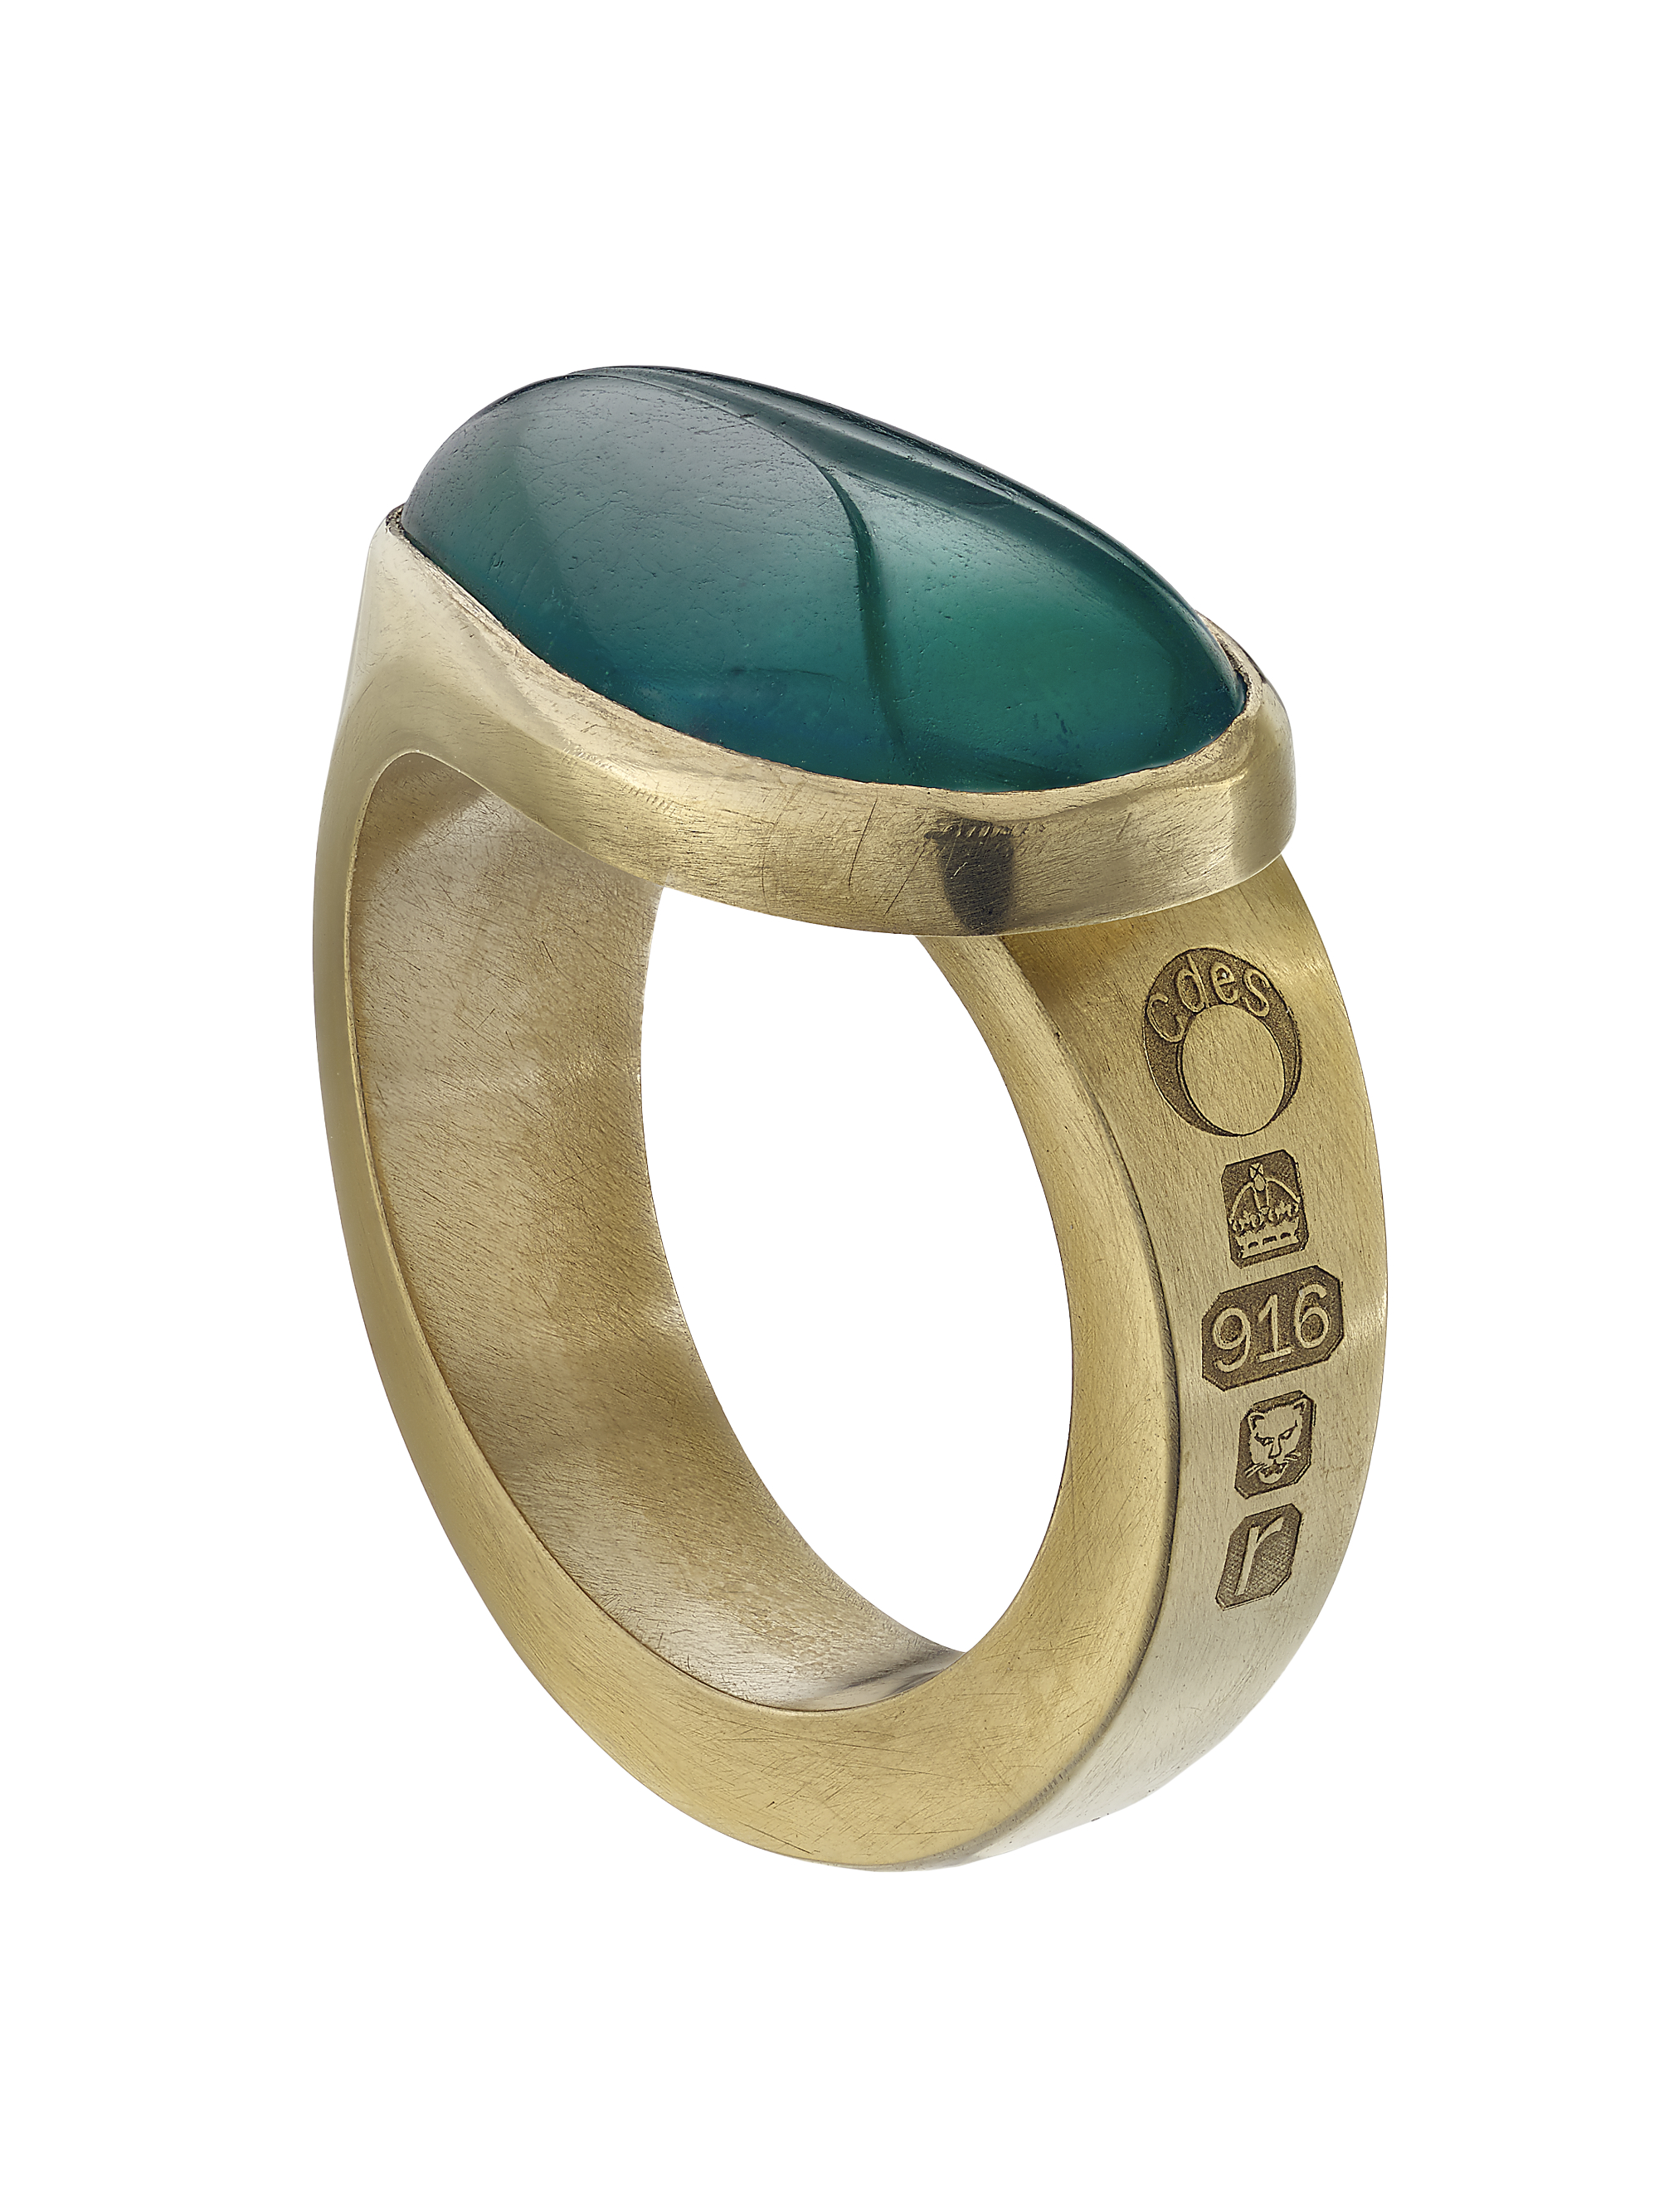 Emerald ring 2014.jpg